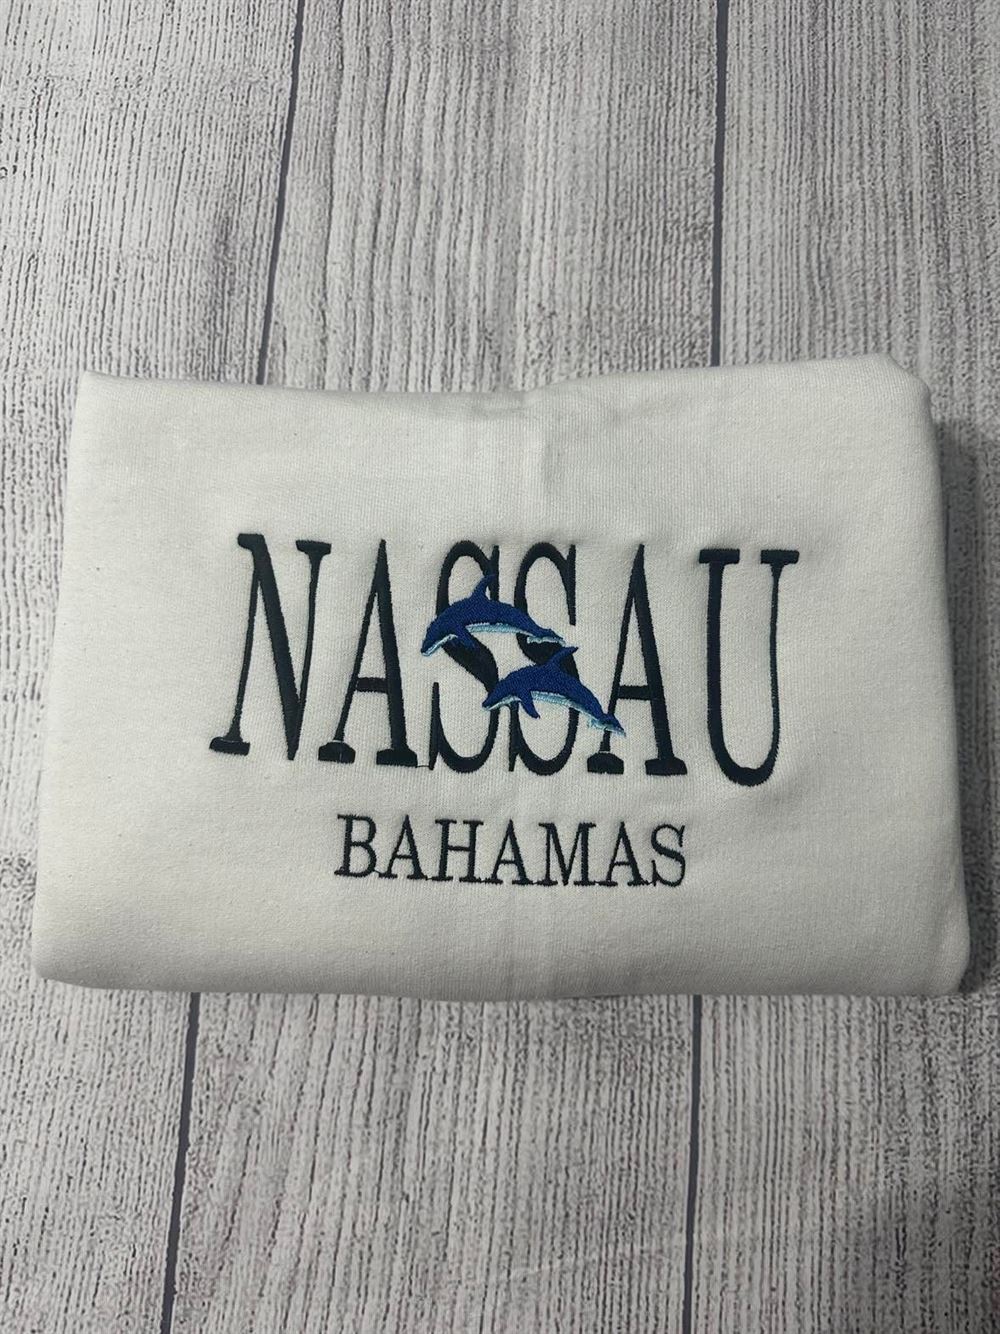 Nassau Bahamas Embroidered Crewneck, Women's Embroidered Sweatshirts